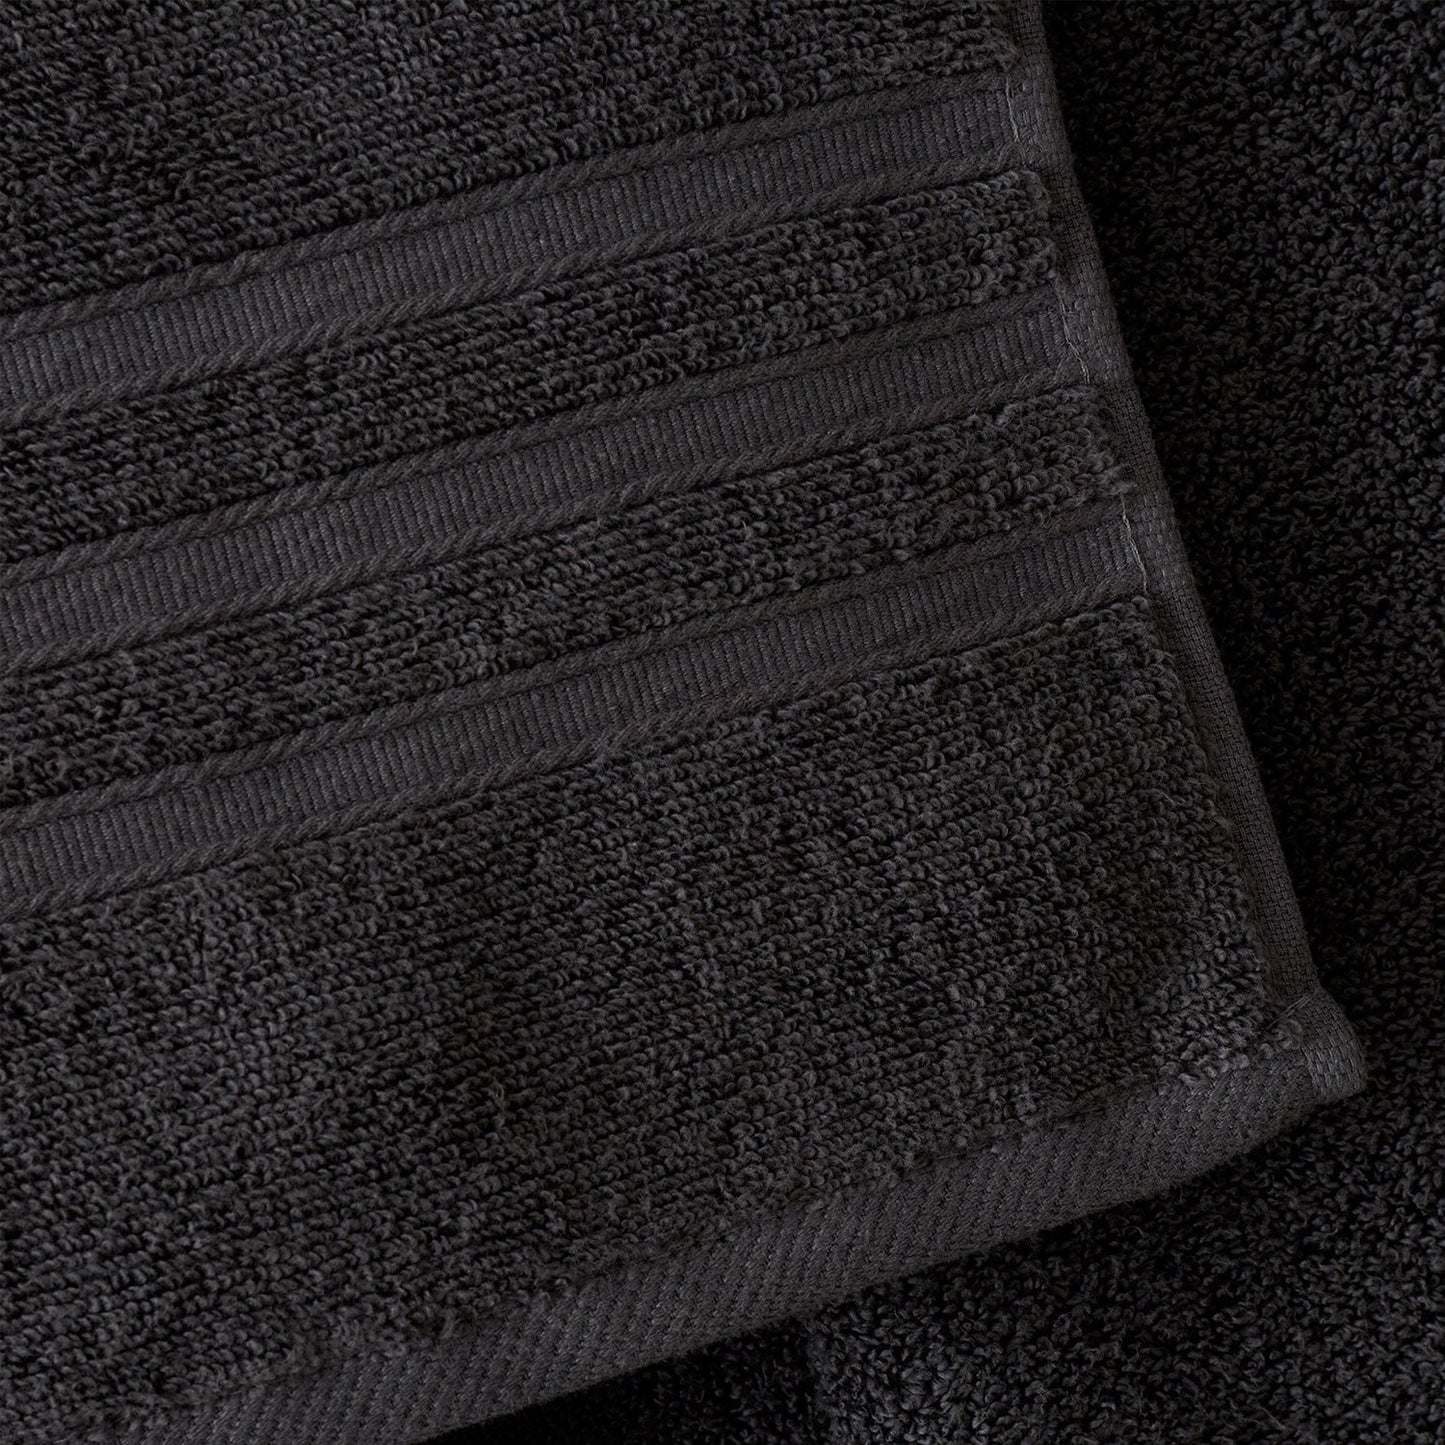 Catherine Lansfield Zero Twist Charcoal 450Gsm 100% Cotton Towels